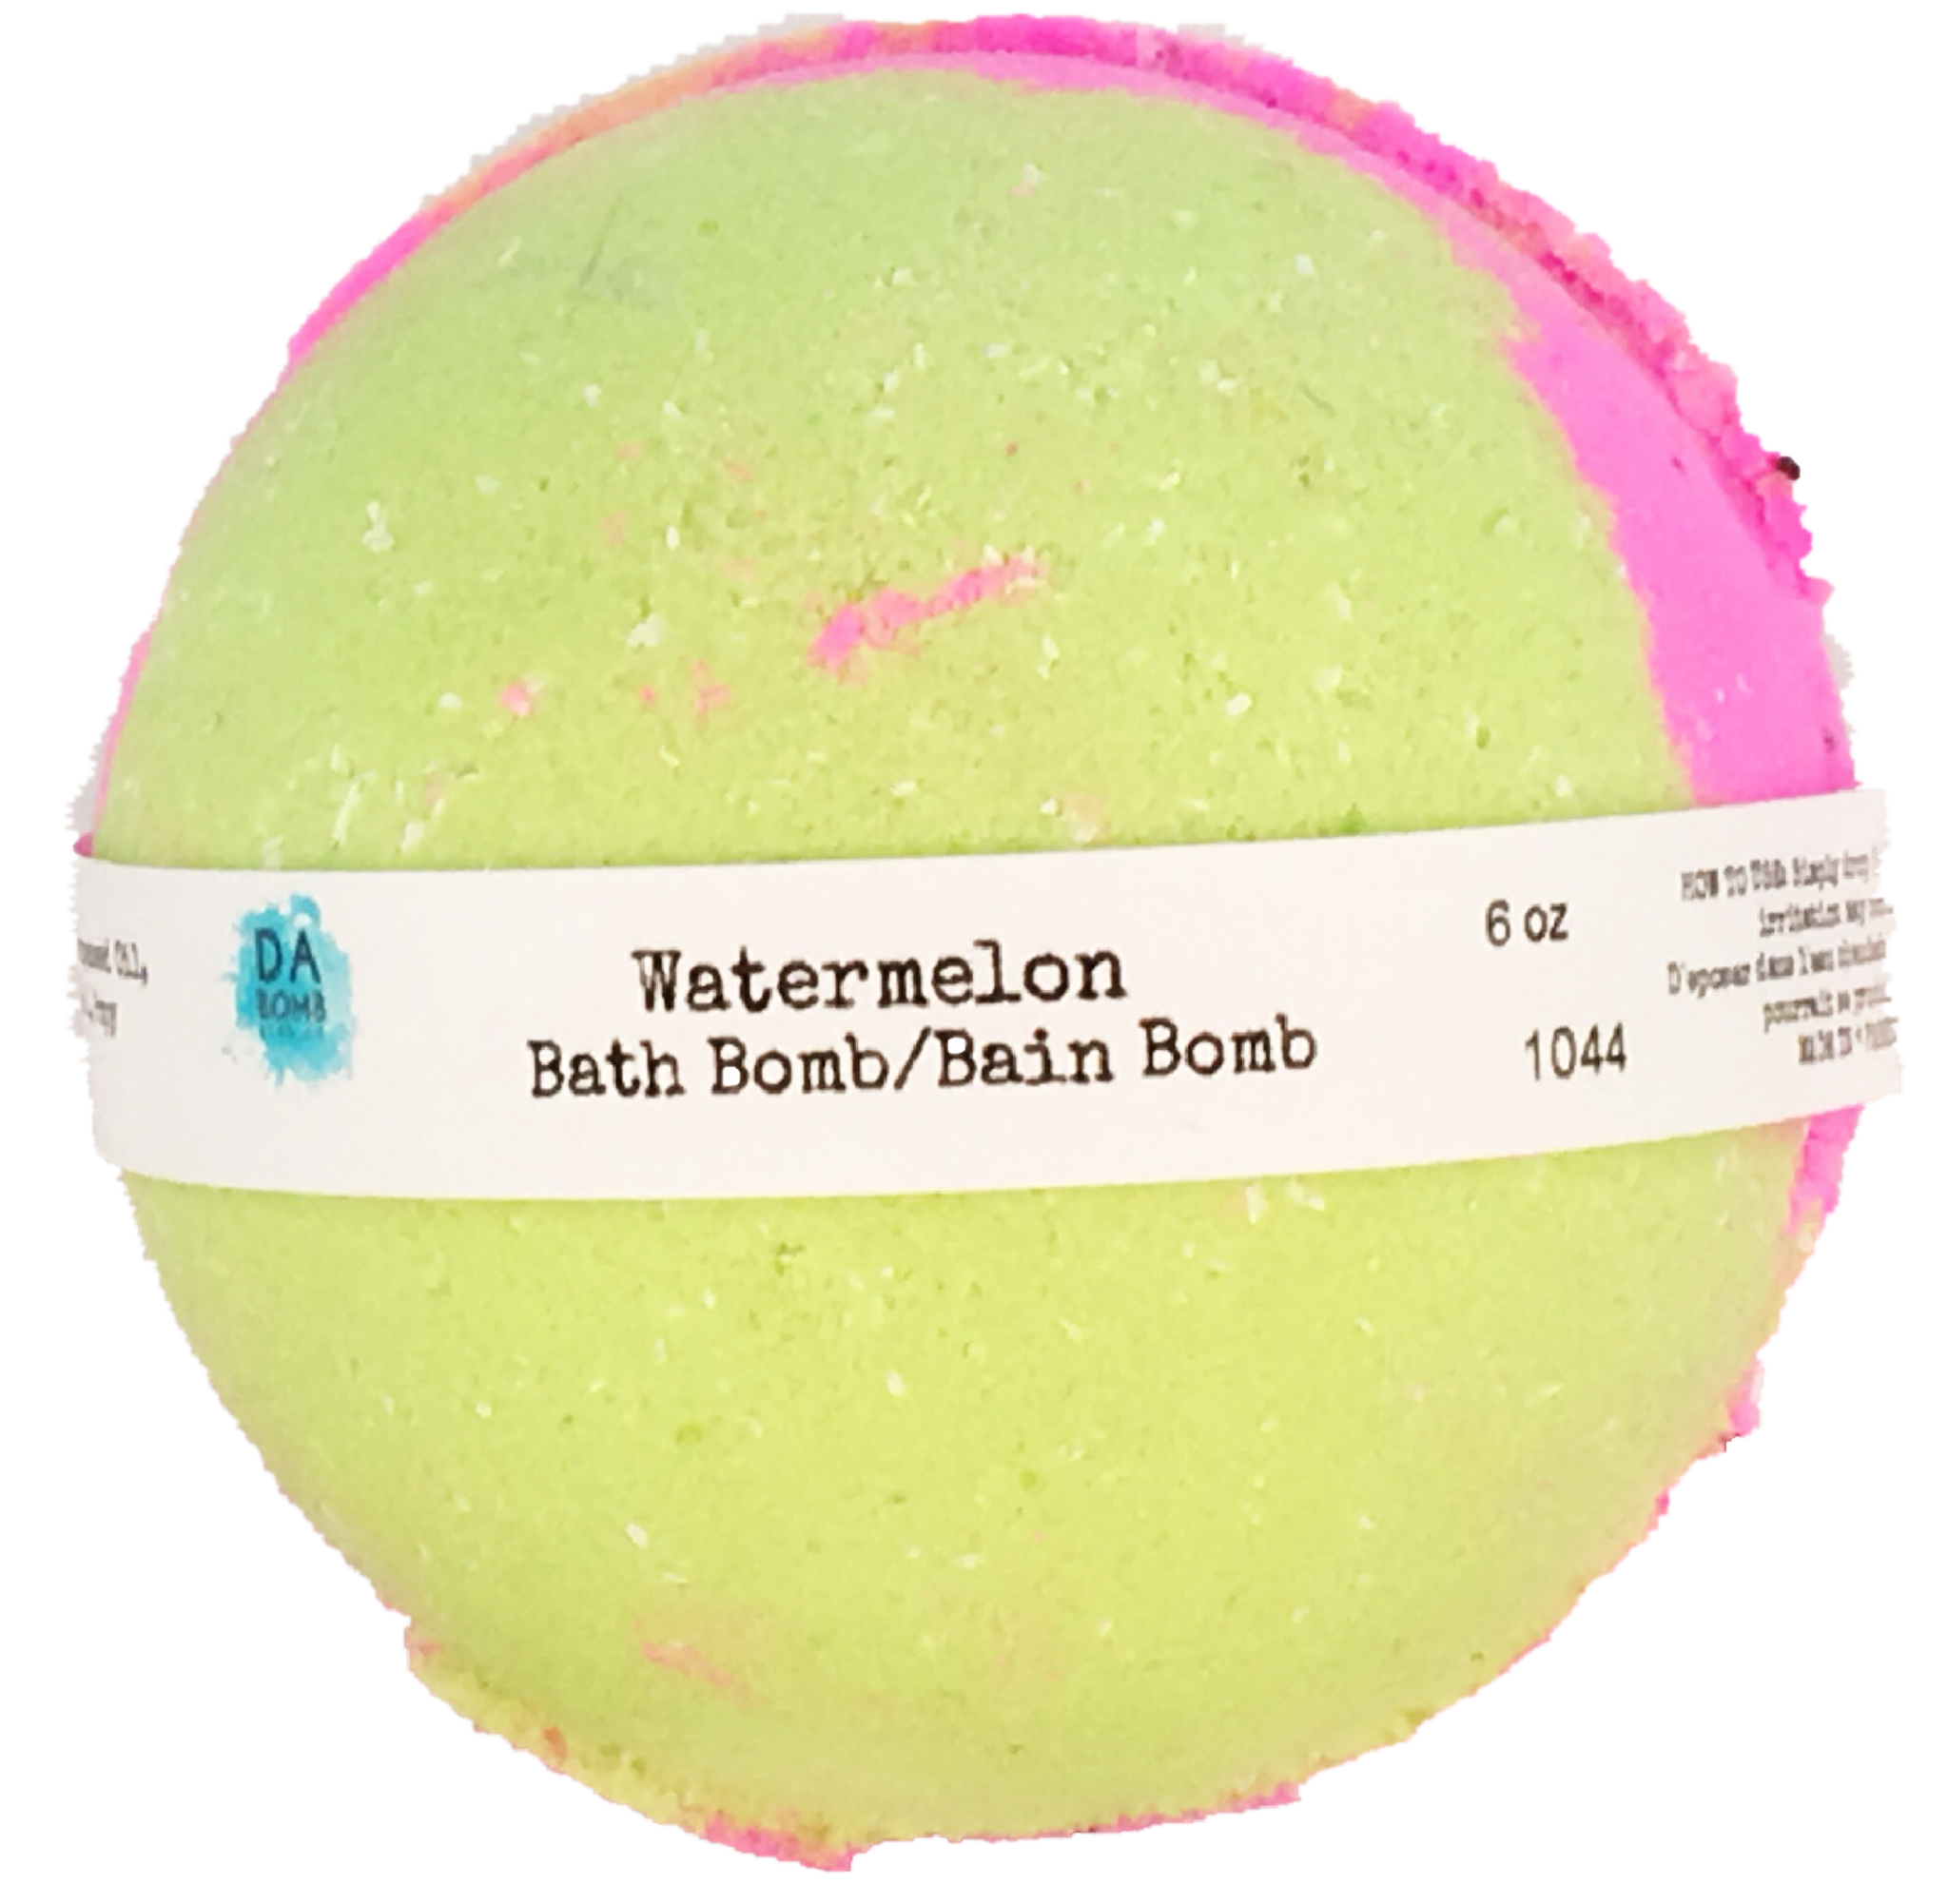 Watermelon 6oz Bath Bomb